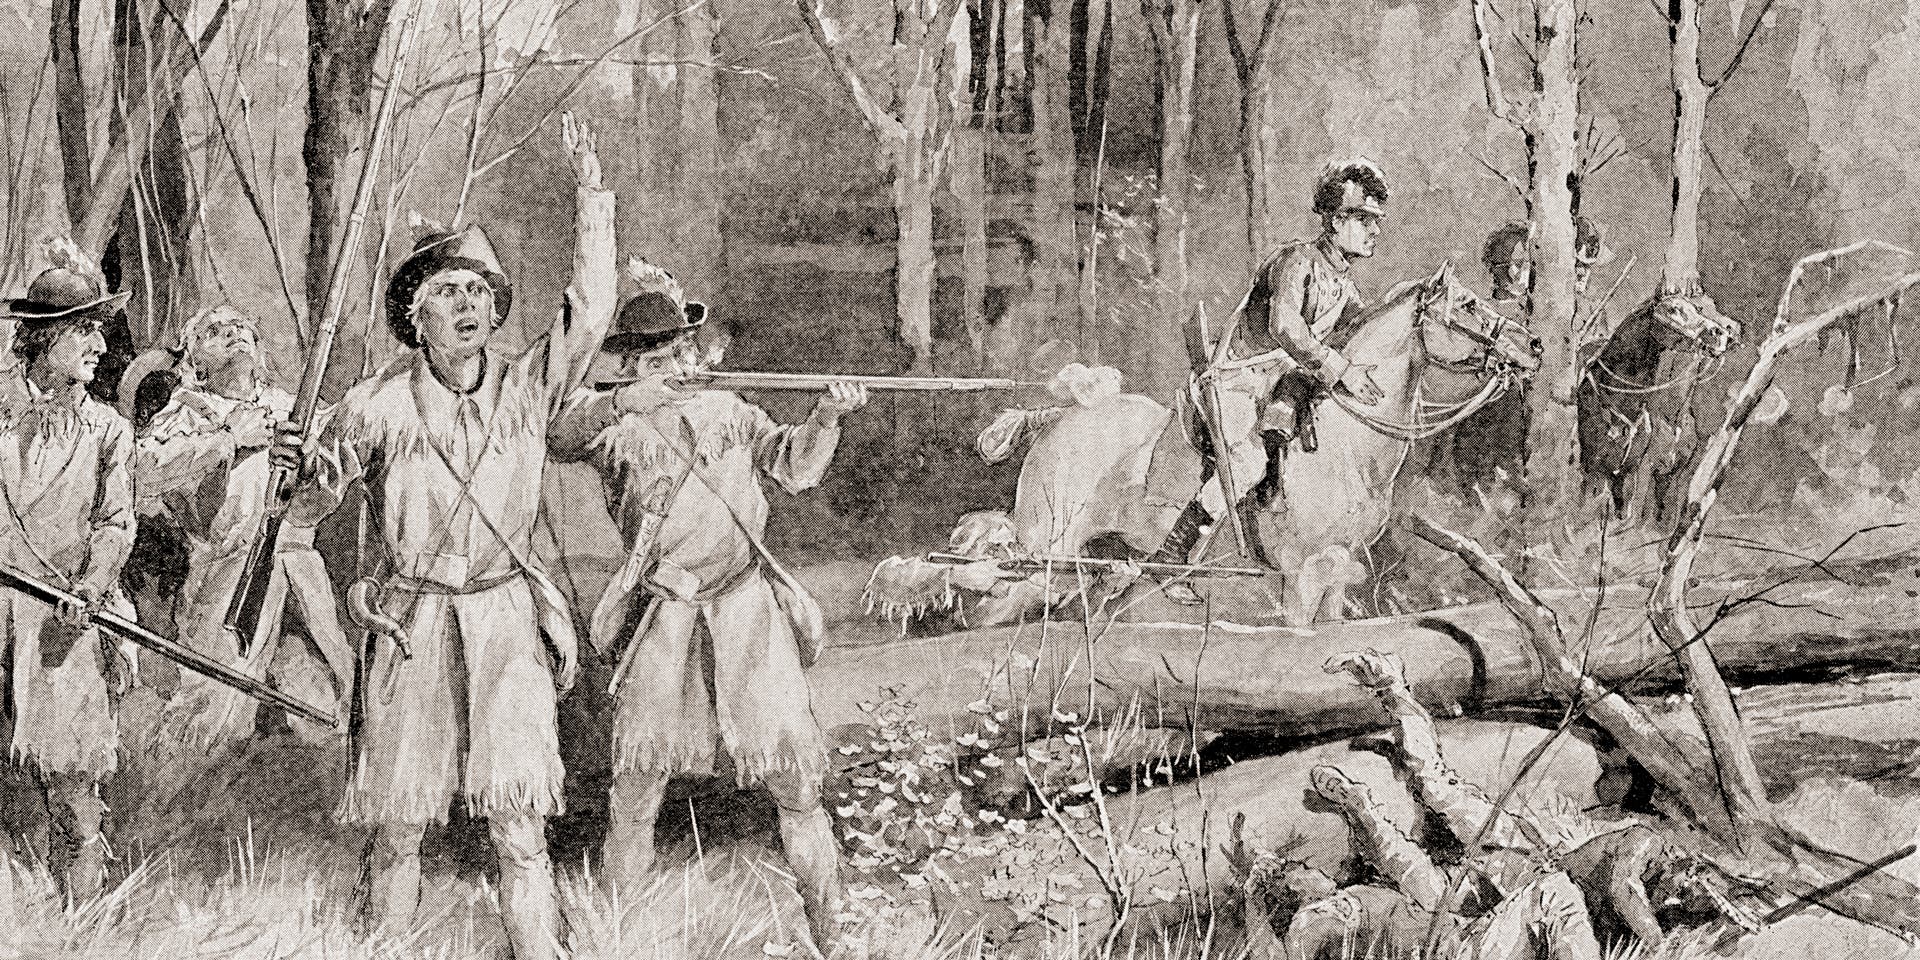 The Battle of Fallen Timbers, 1794 Northwest Indian War